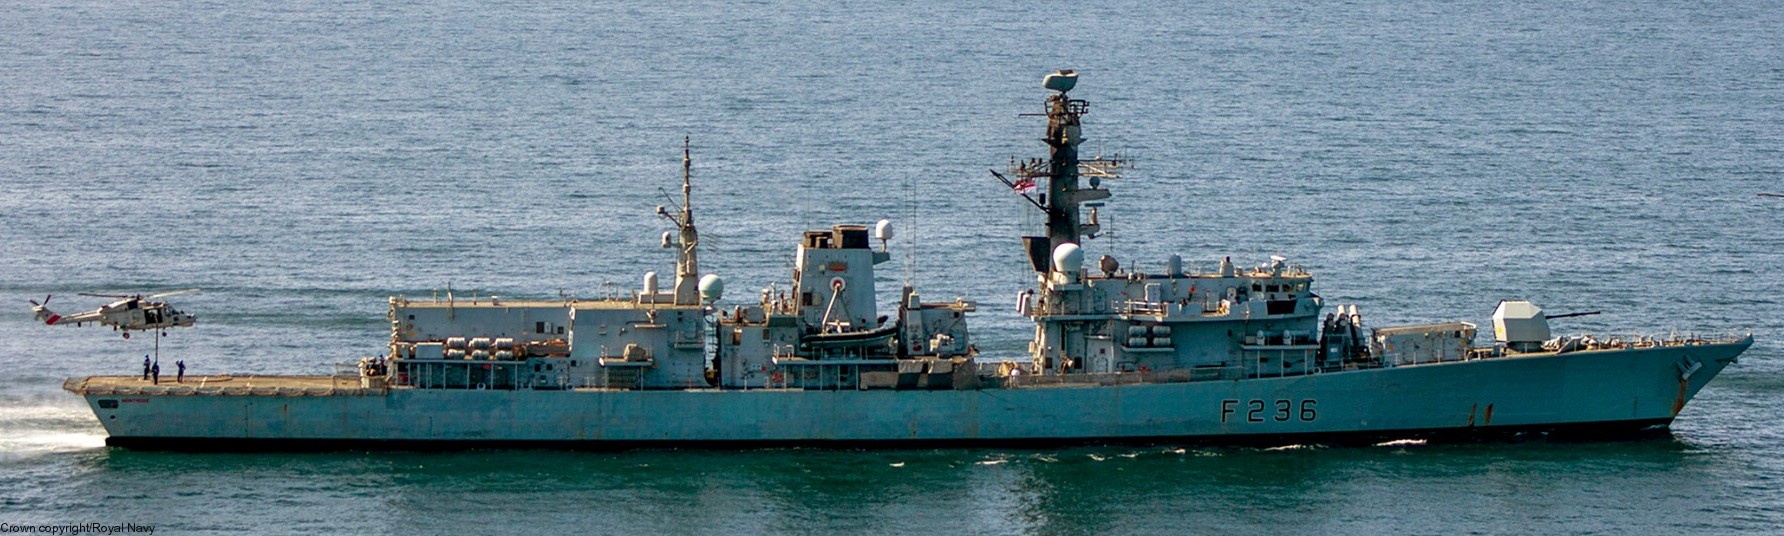 f-236 hms montrose type 23 duke class guided missile frigate ffg royal navy 19